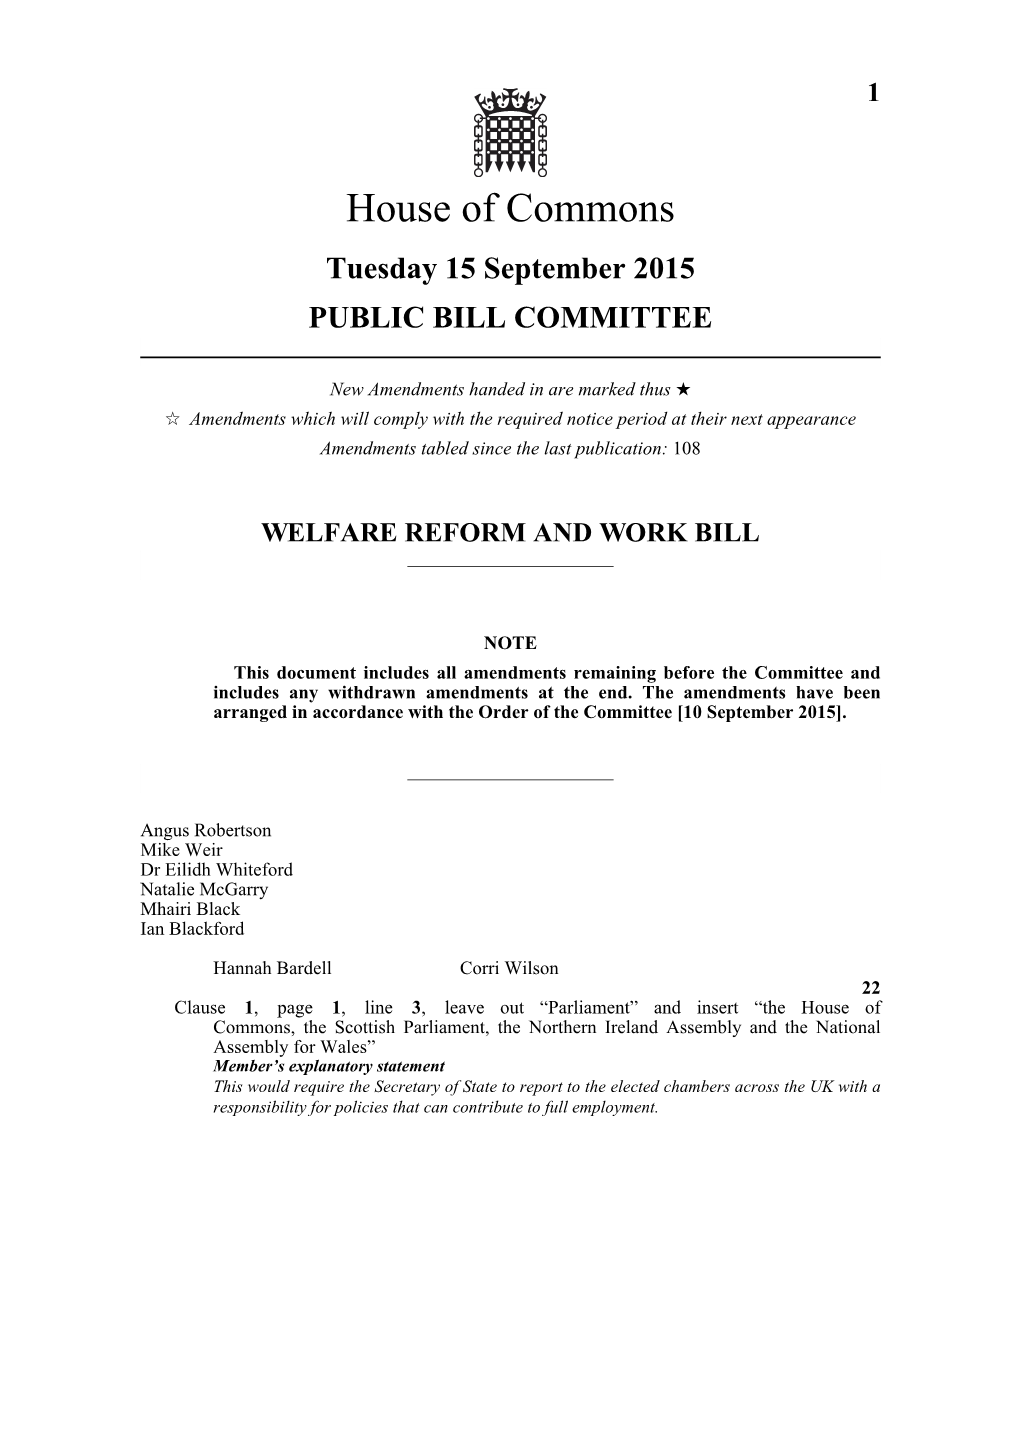 Welfare Reform and Work Bill